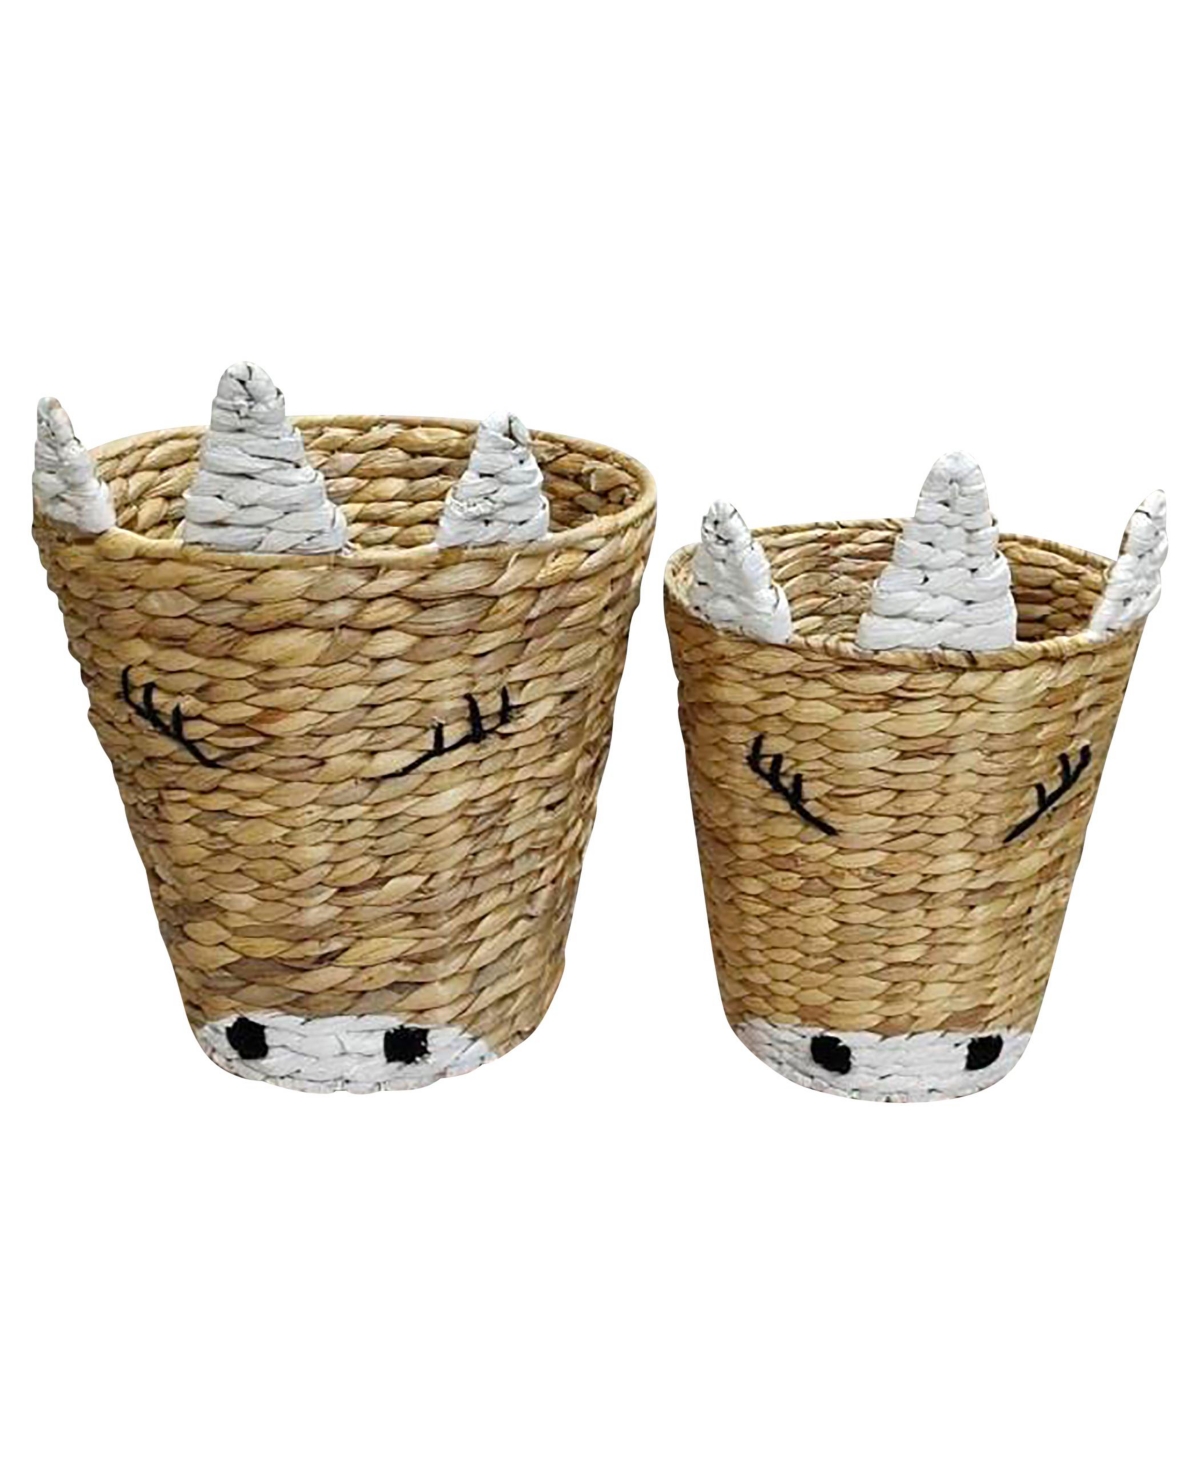 Round Unicorn Baskets, Set of 2 - Natural